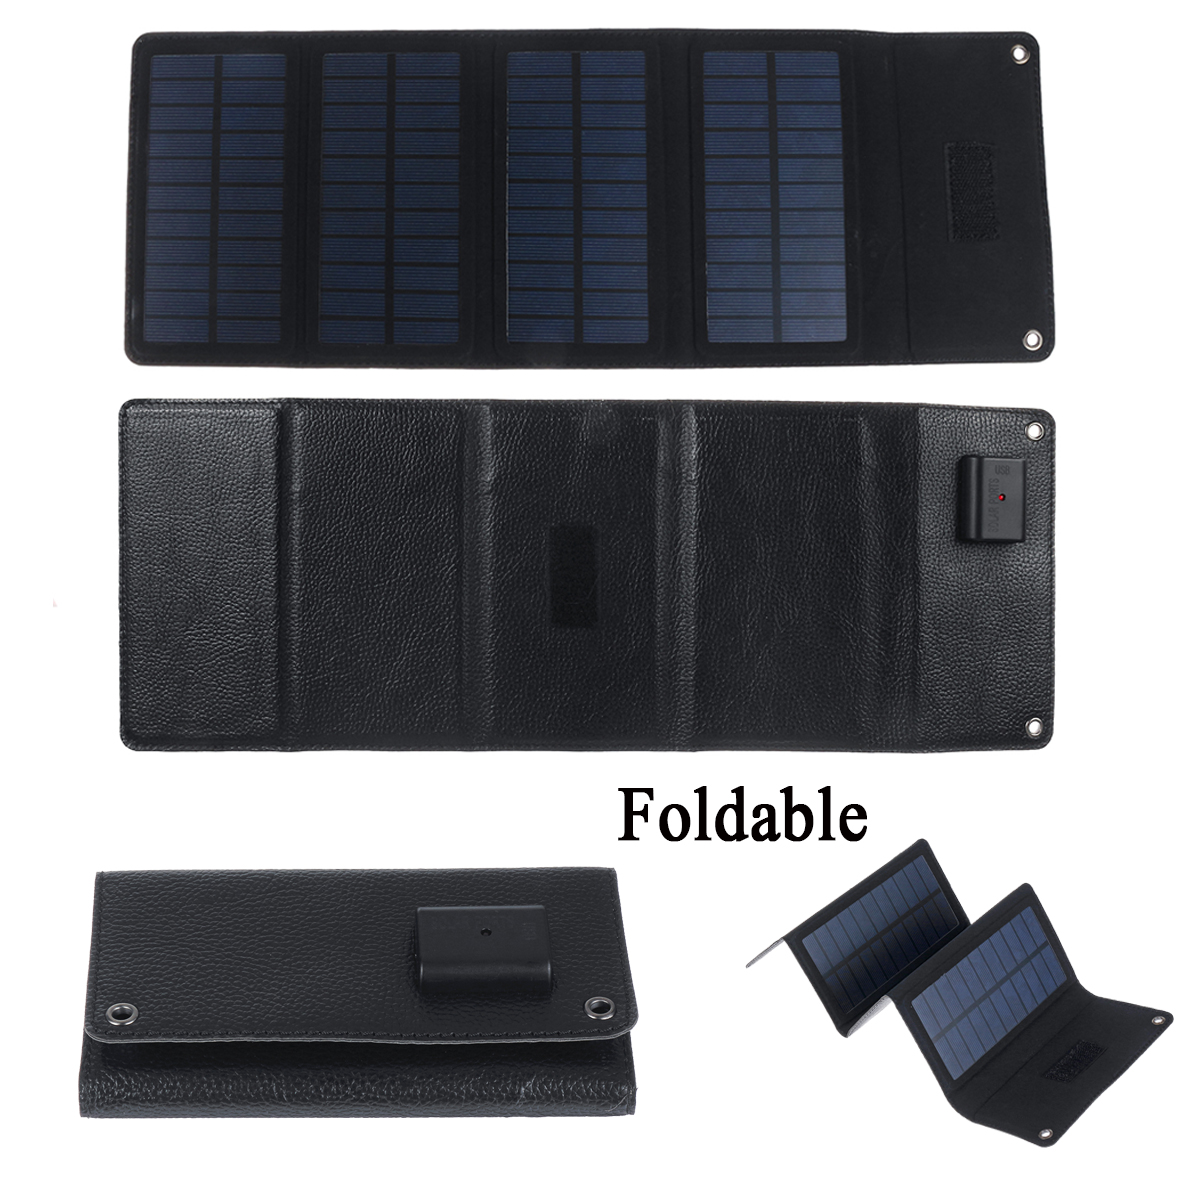 7W 5V Waterproof Foldable Mono-crystalline Silicon Solar Panel With LED Charging indicator & USB Interface 27